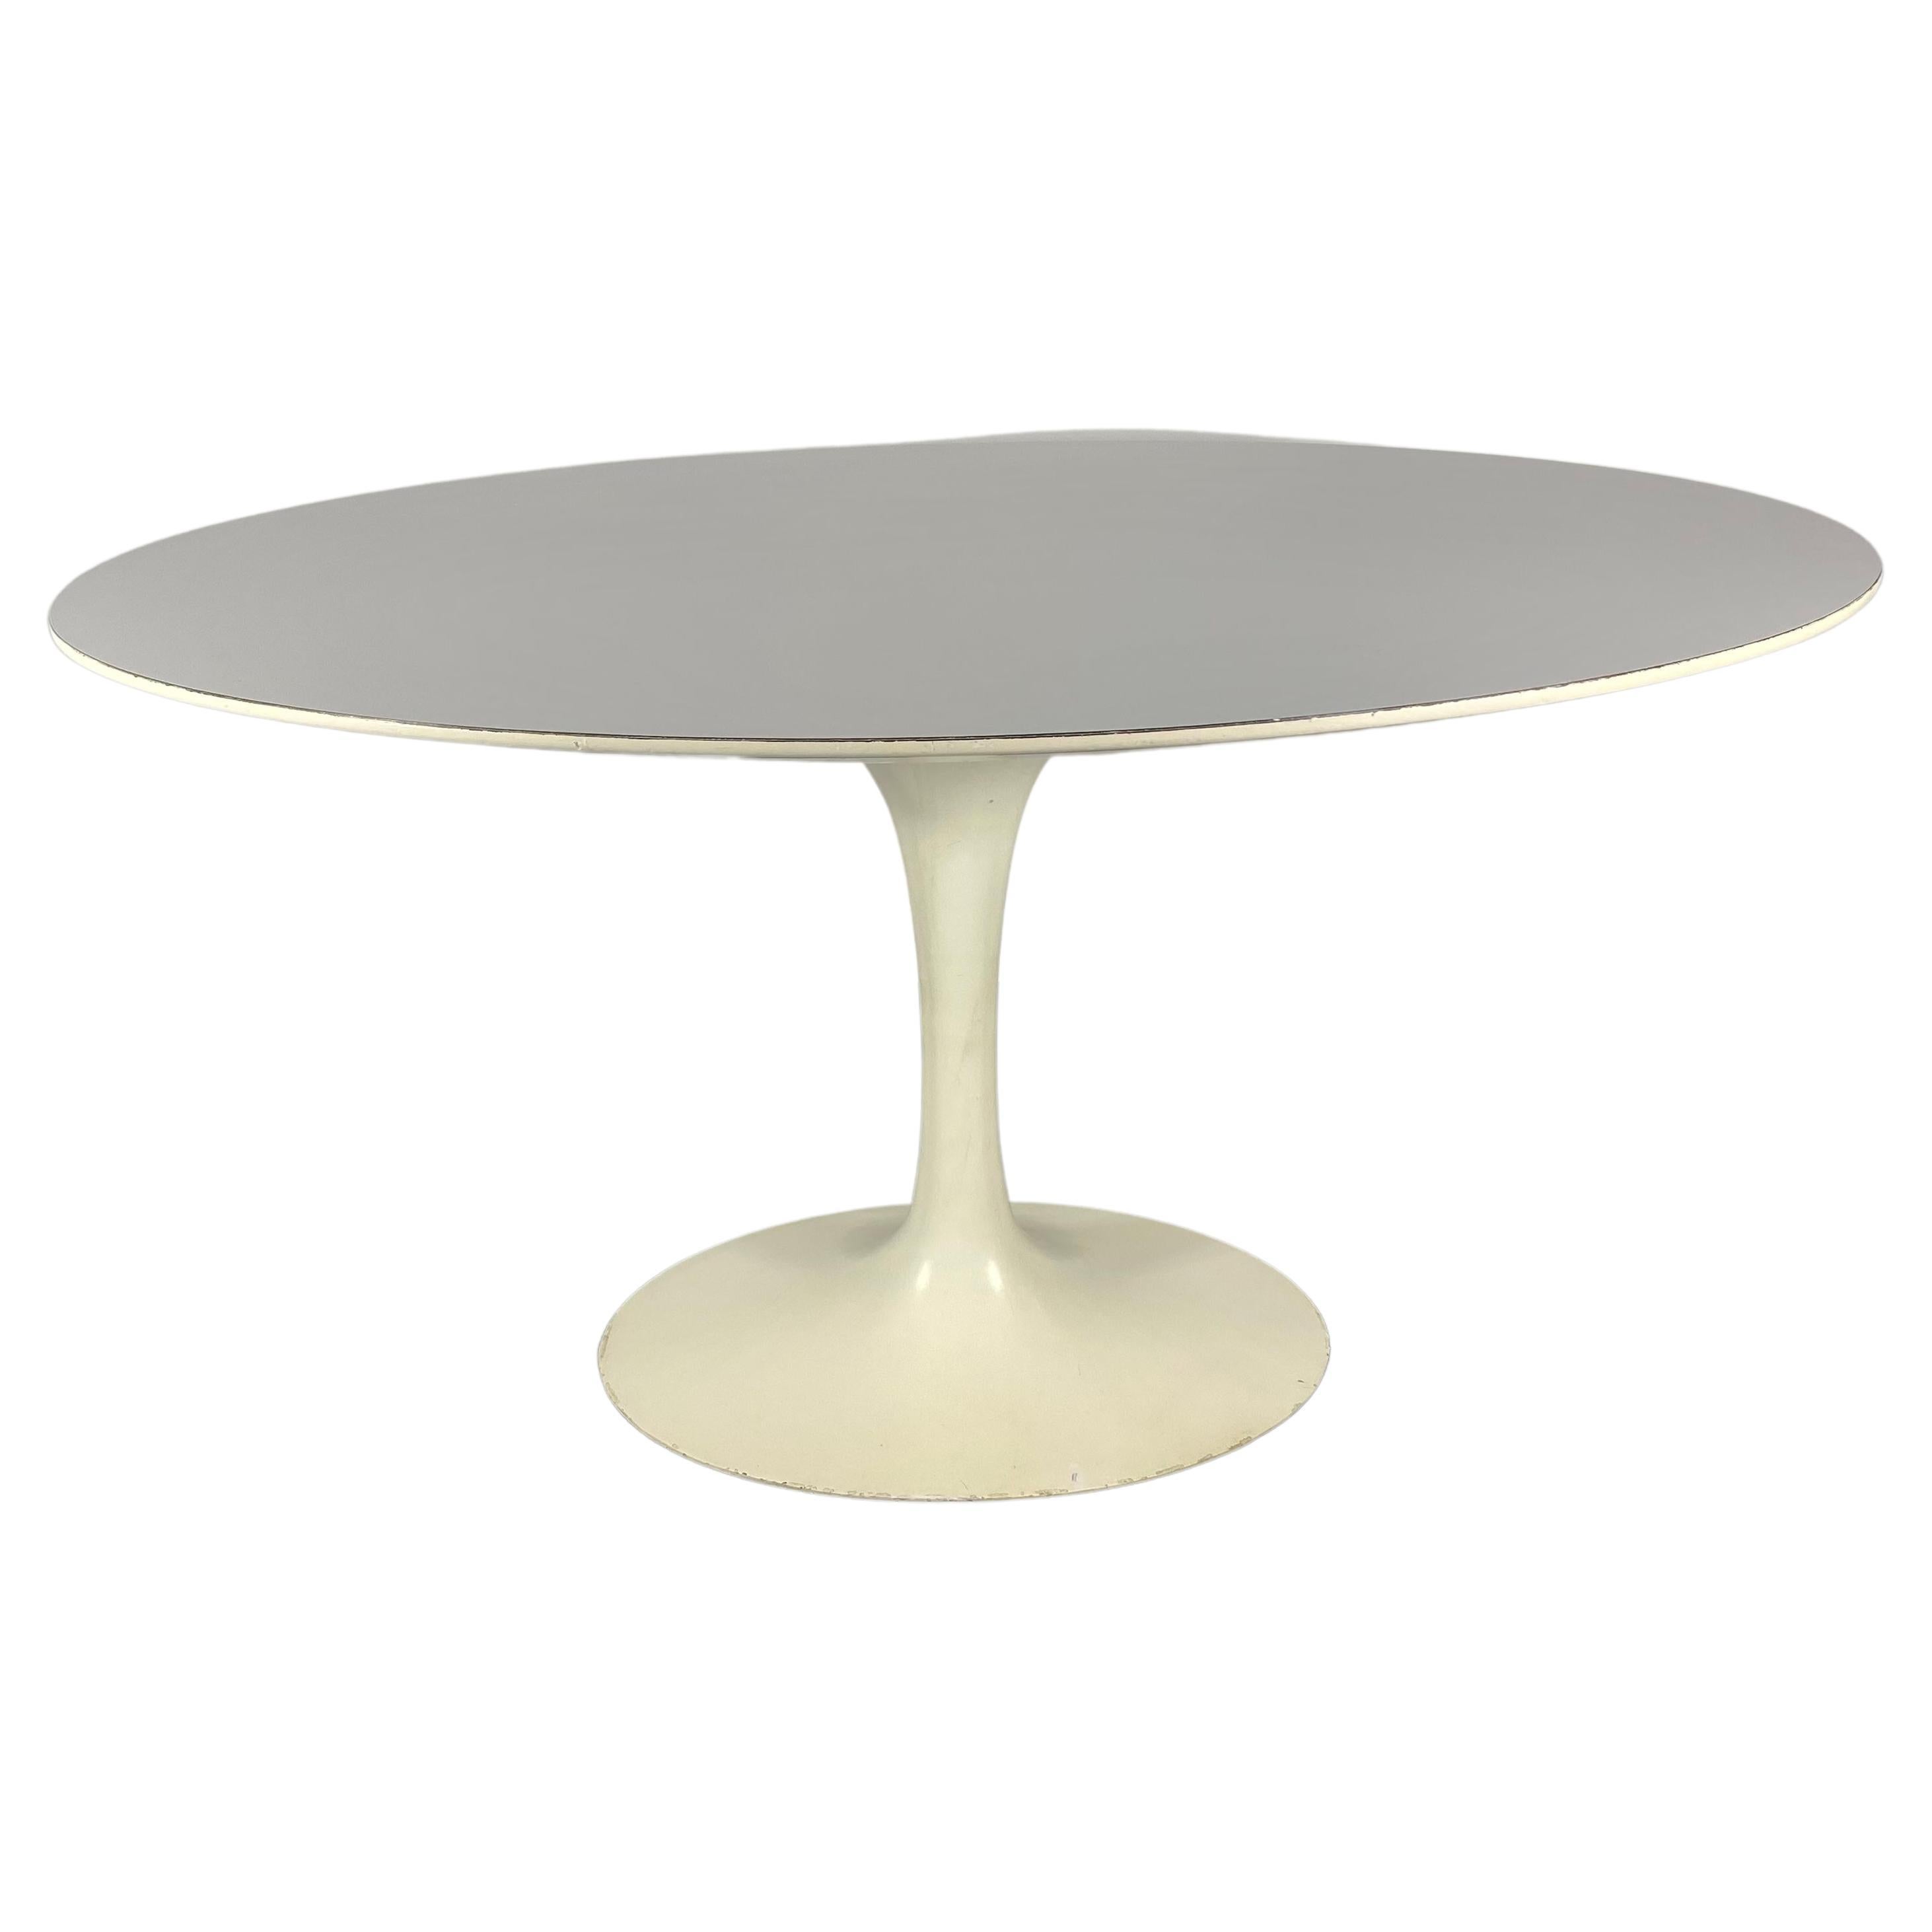 Early Production Eero Saarinen / Knoll, Oval Pedestal Tulip Dining Table